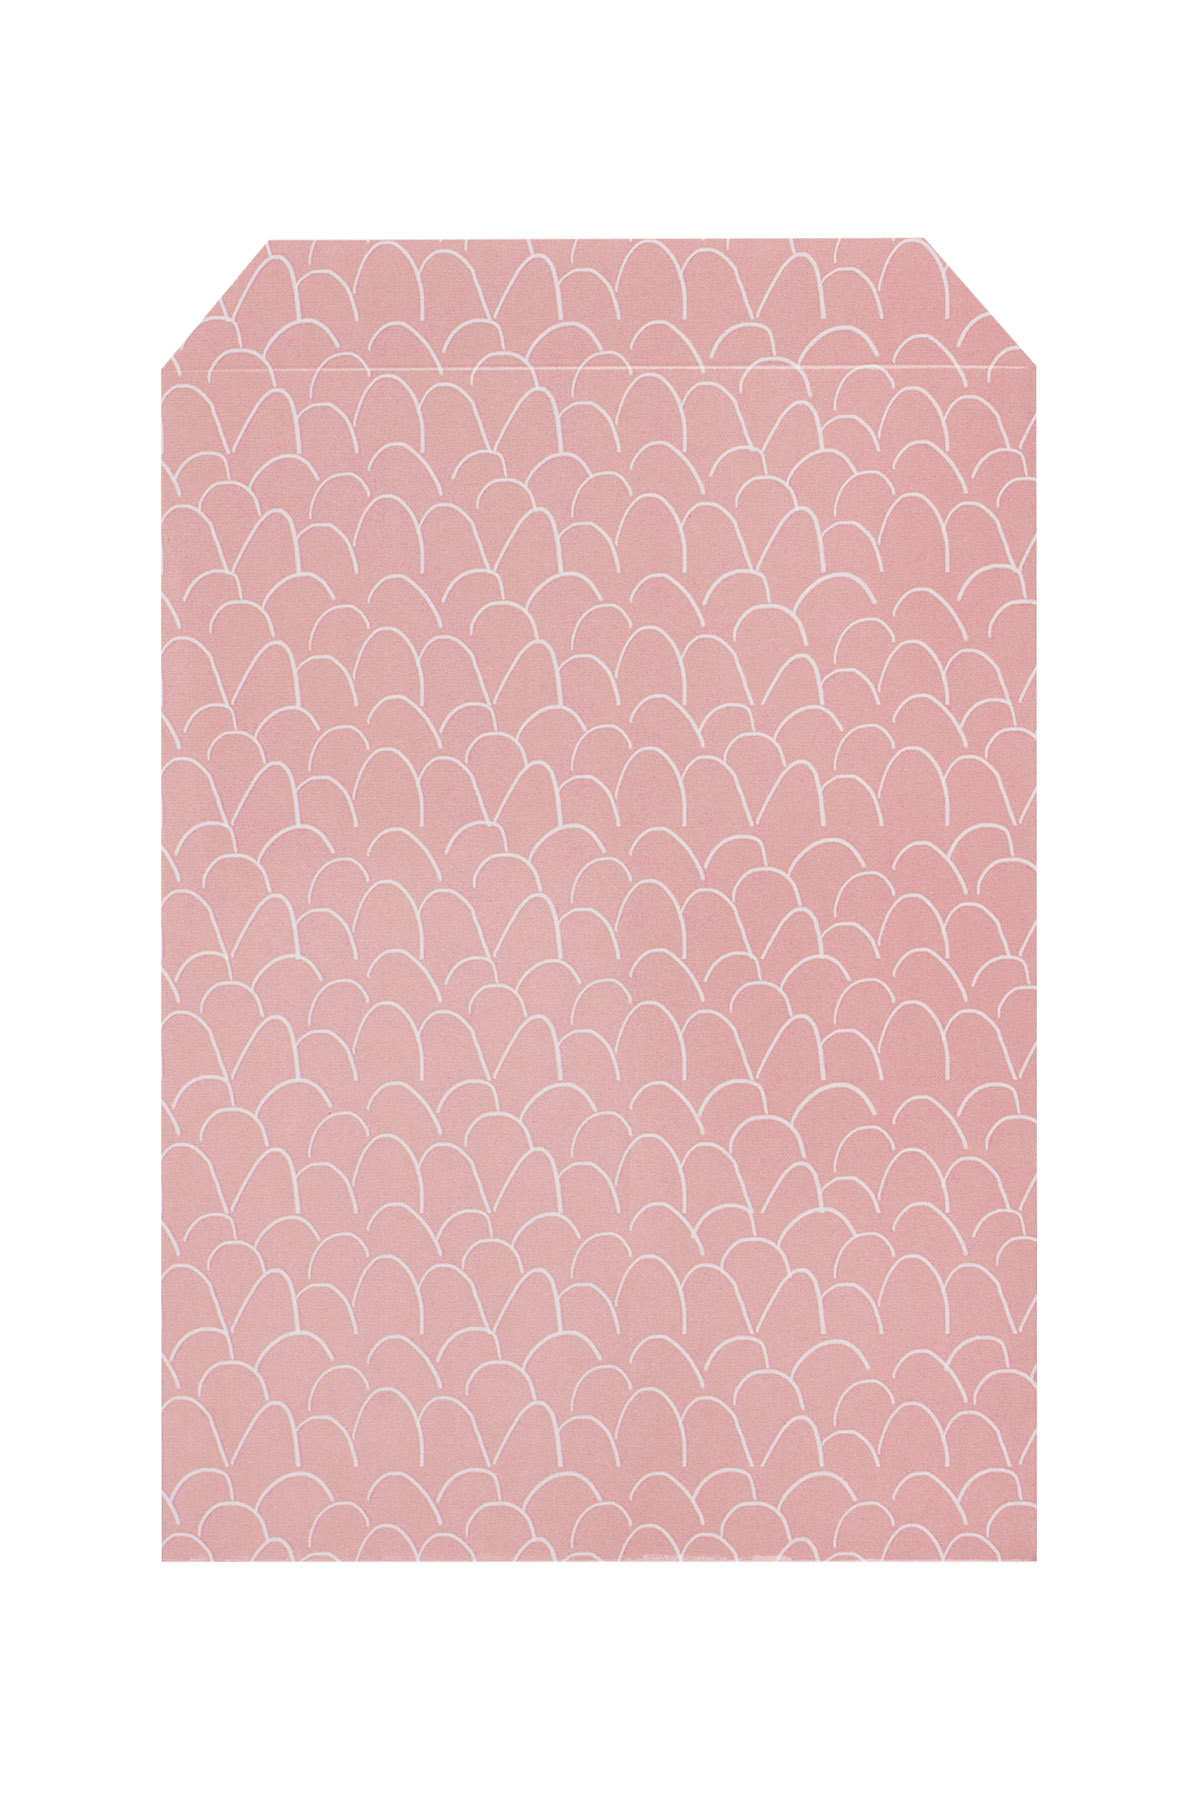 Jewelery envelope pink print